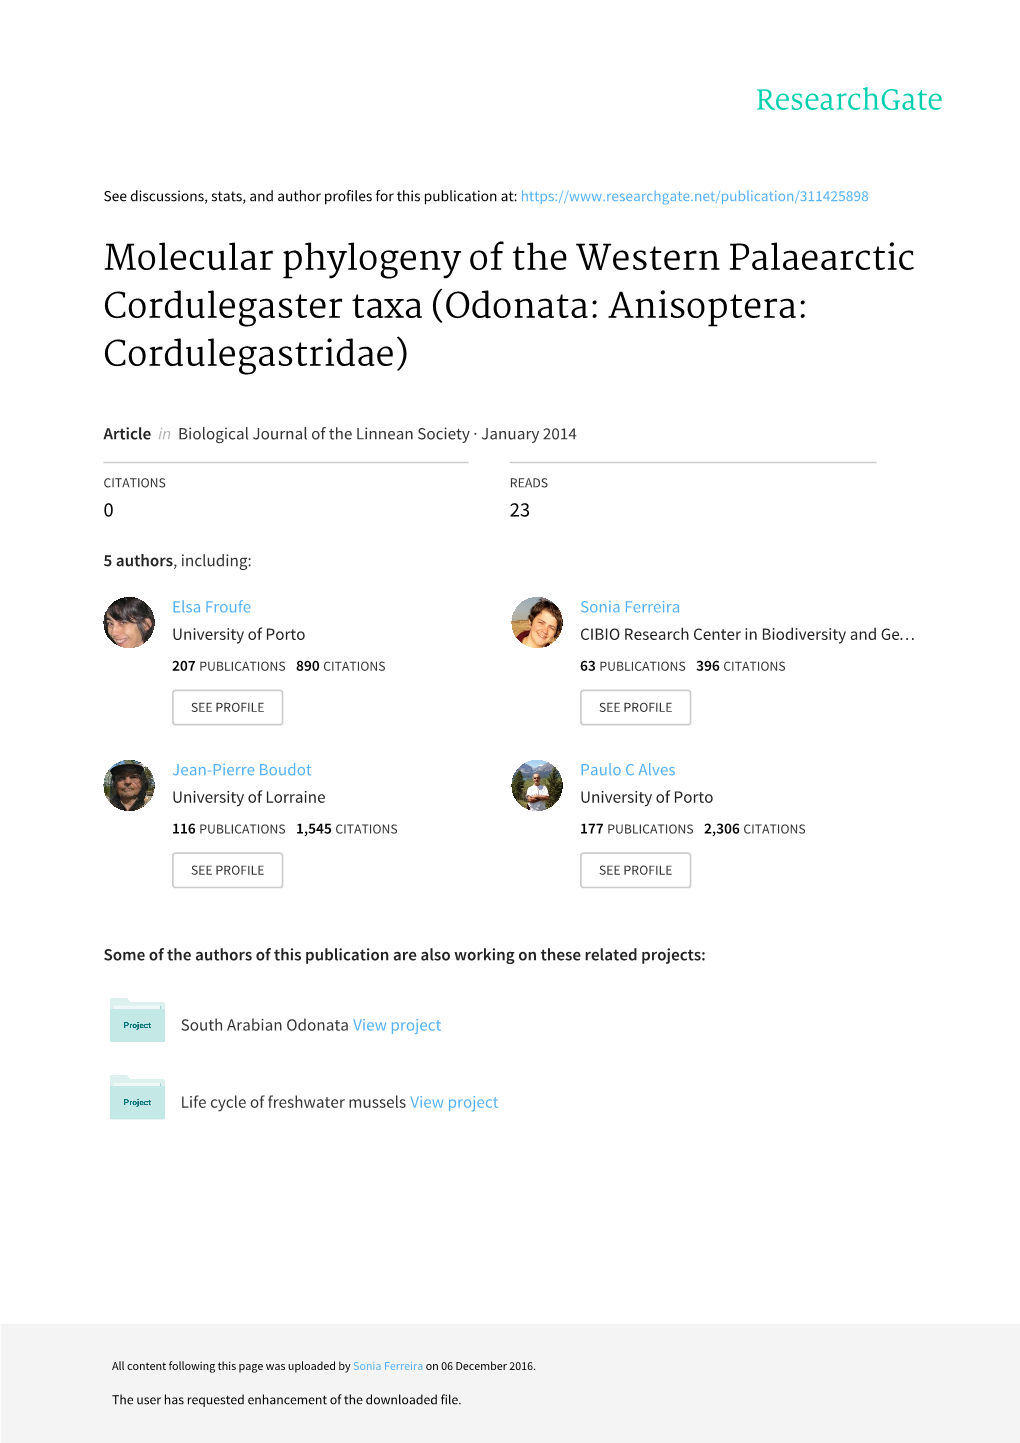 Molecular Phylogeny of the Western Palaearctic Cordulegaster Taxa (Odonata: Anisoptera: Cordulegastridae)